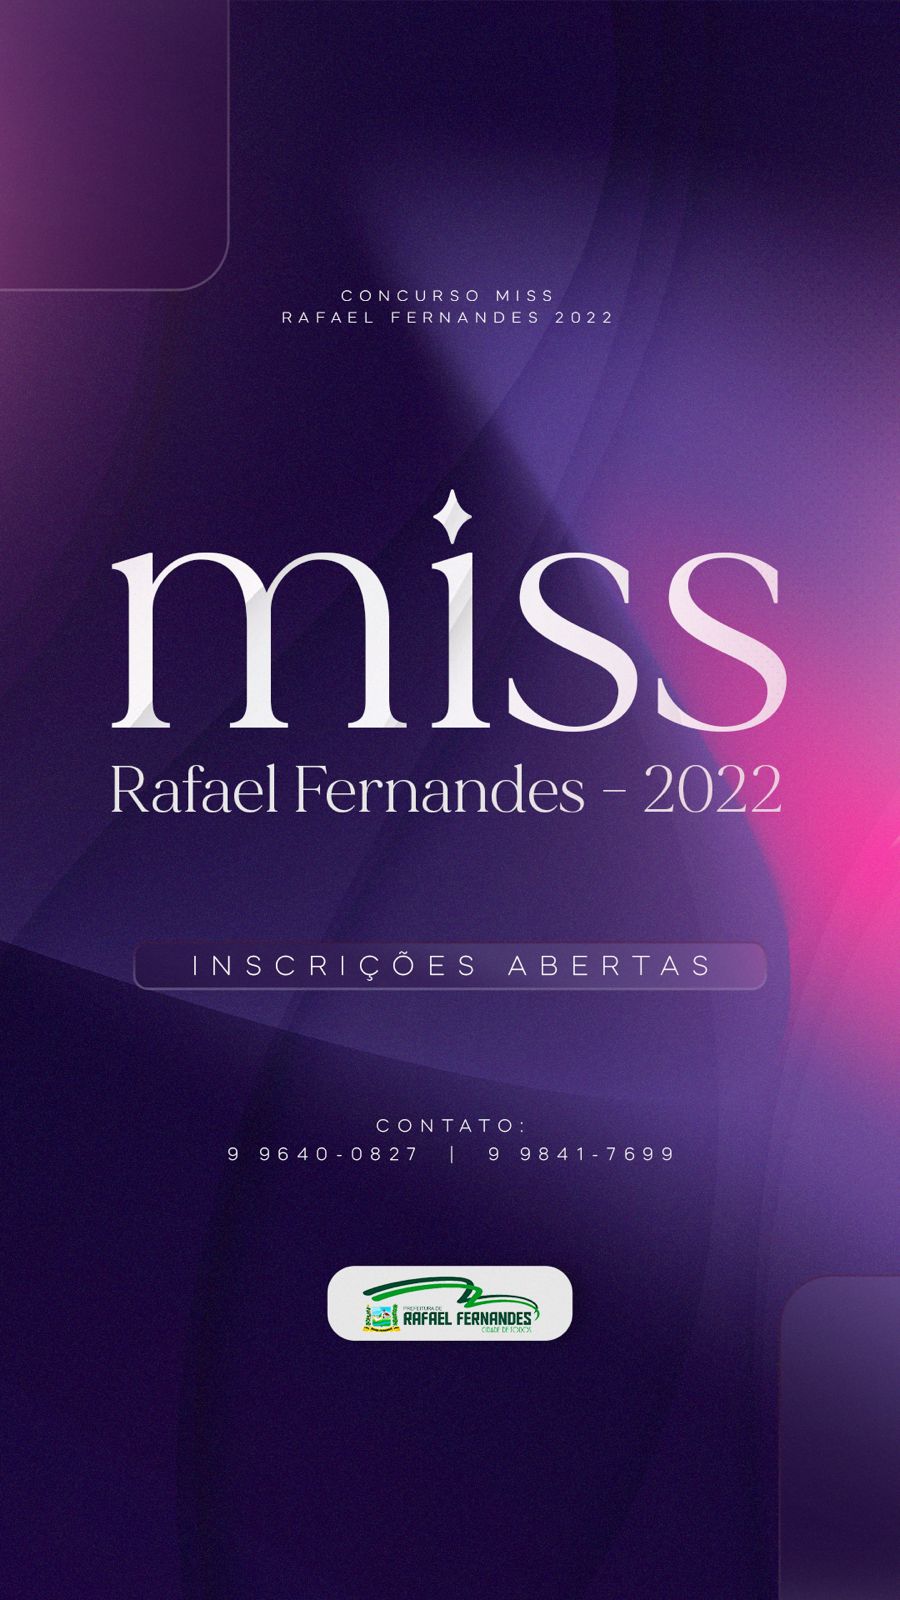 Concurso Miss Rafael Fernandes 2022